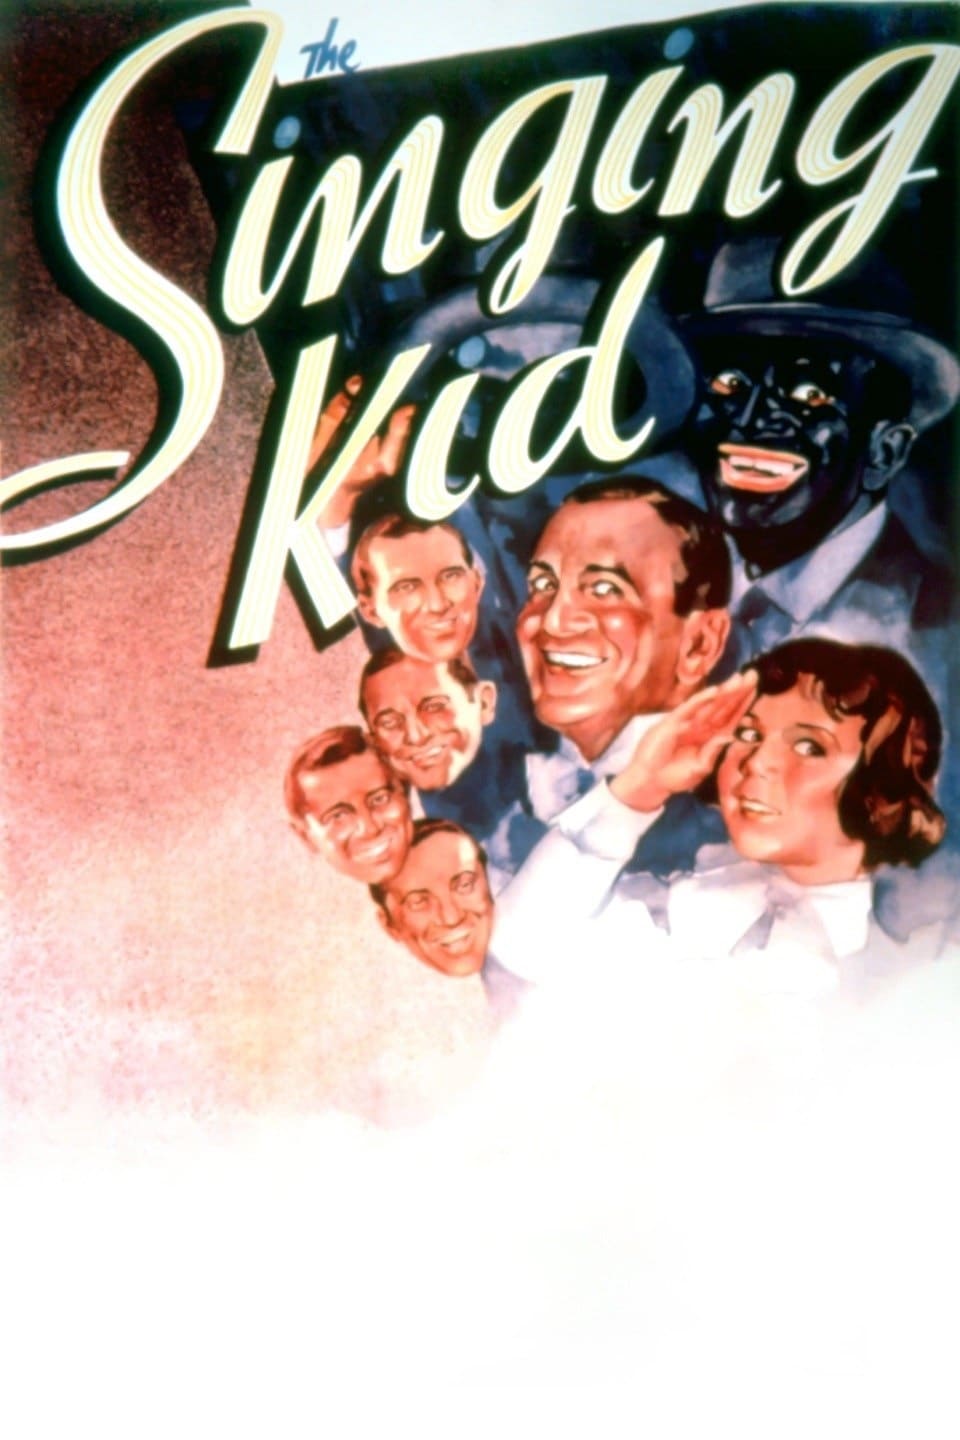 The Singing Kid (1936)